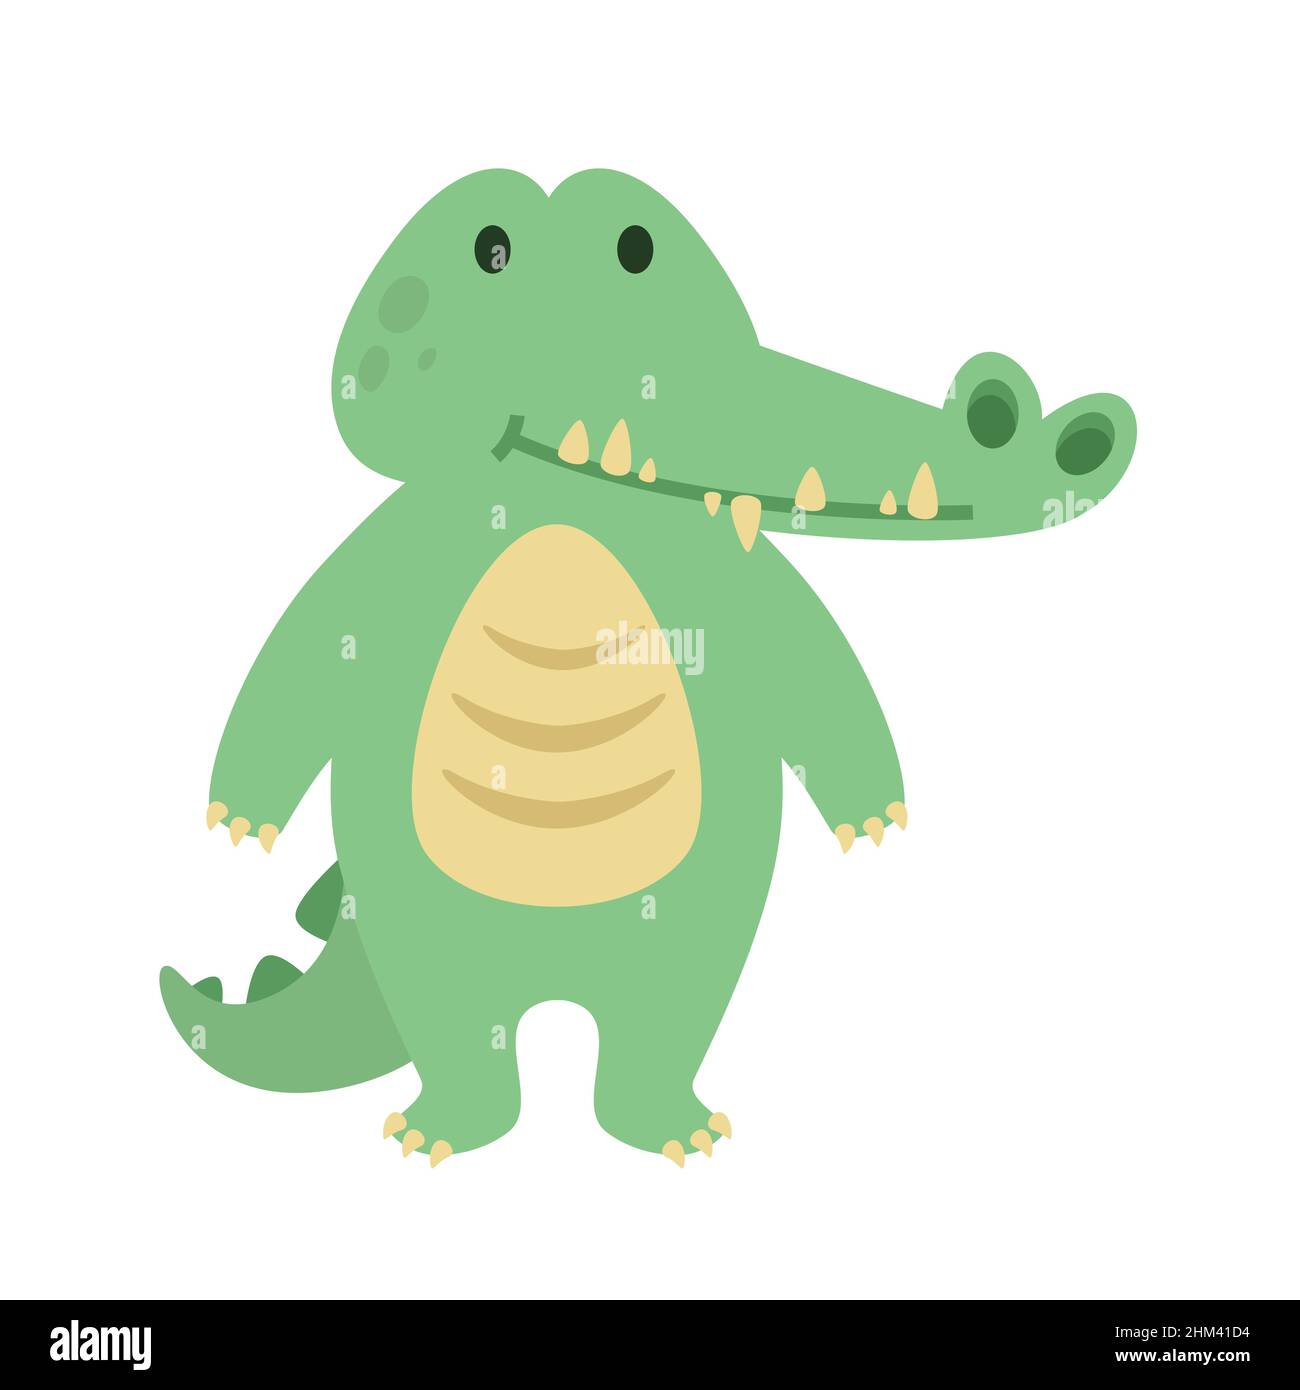 cartoon style illustration of a cute crocodile Stock Vector